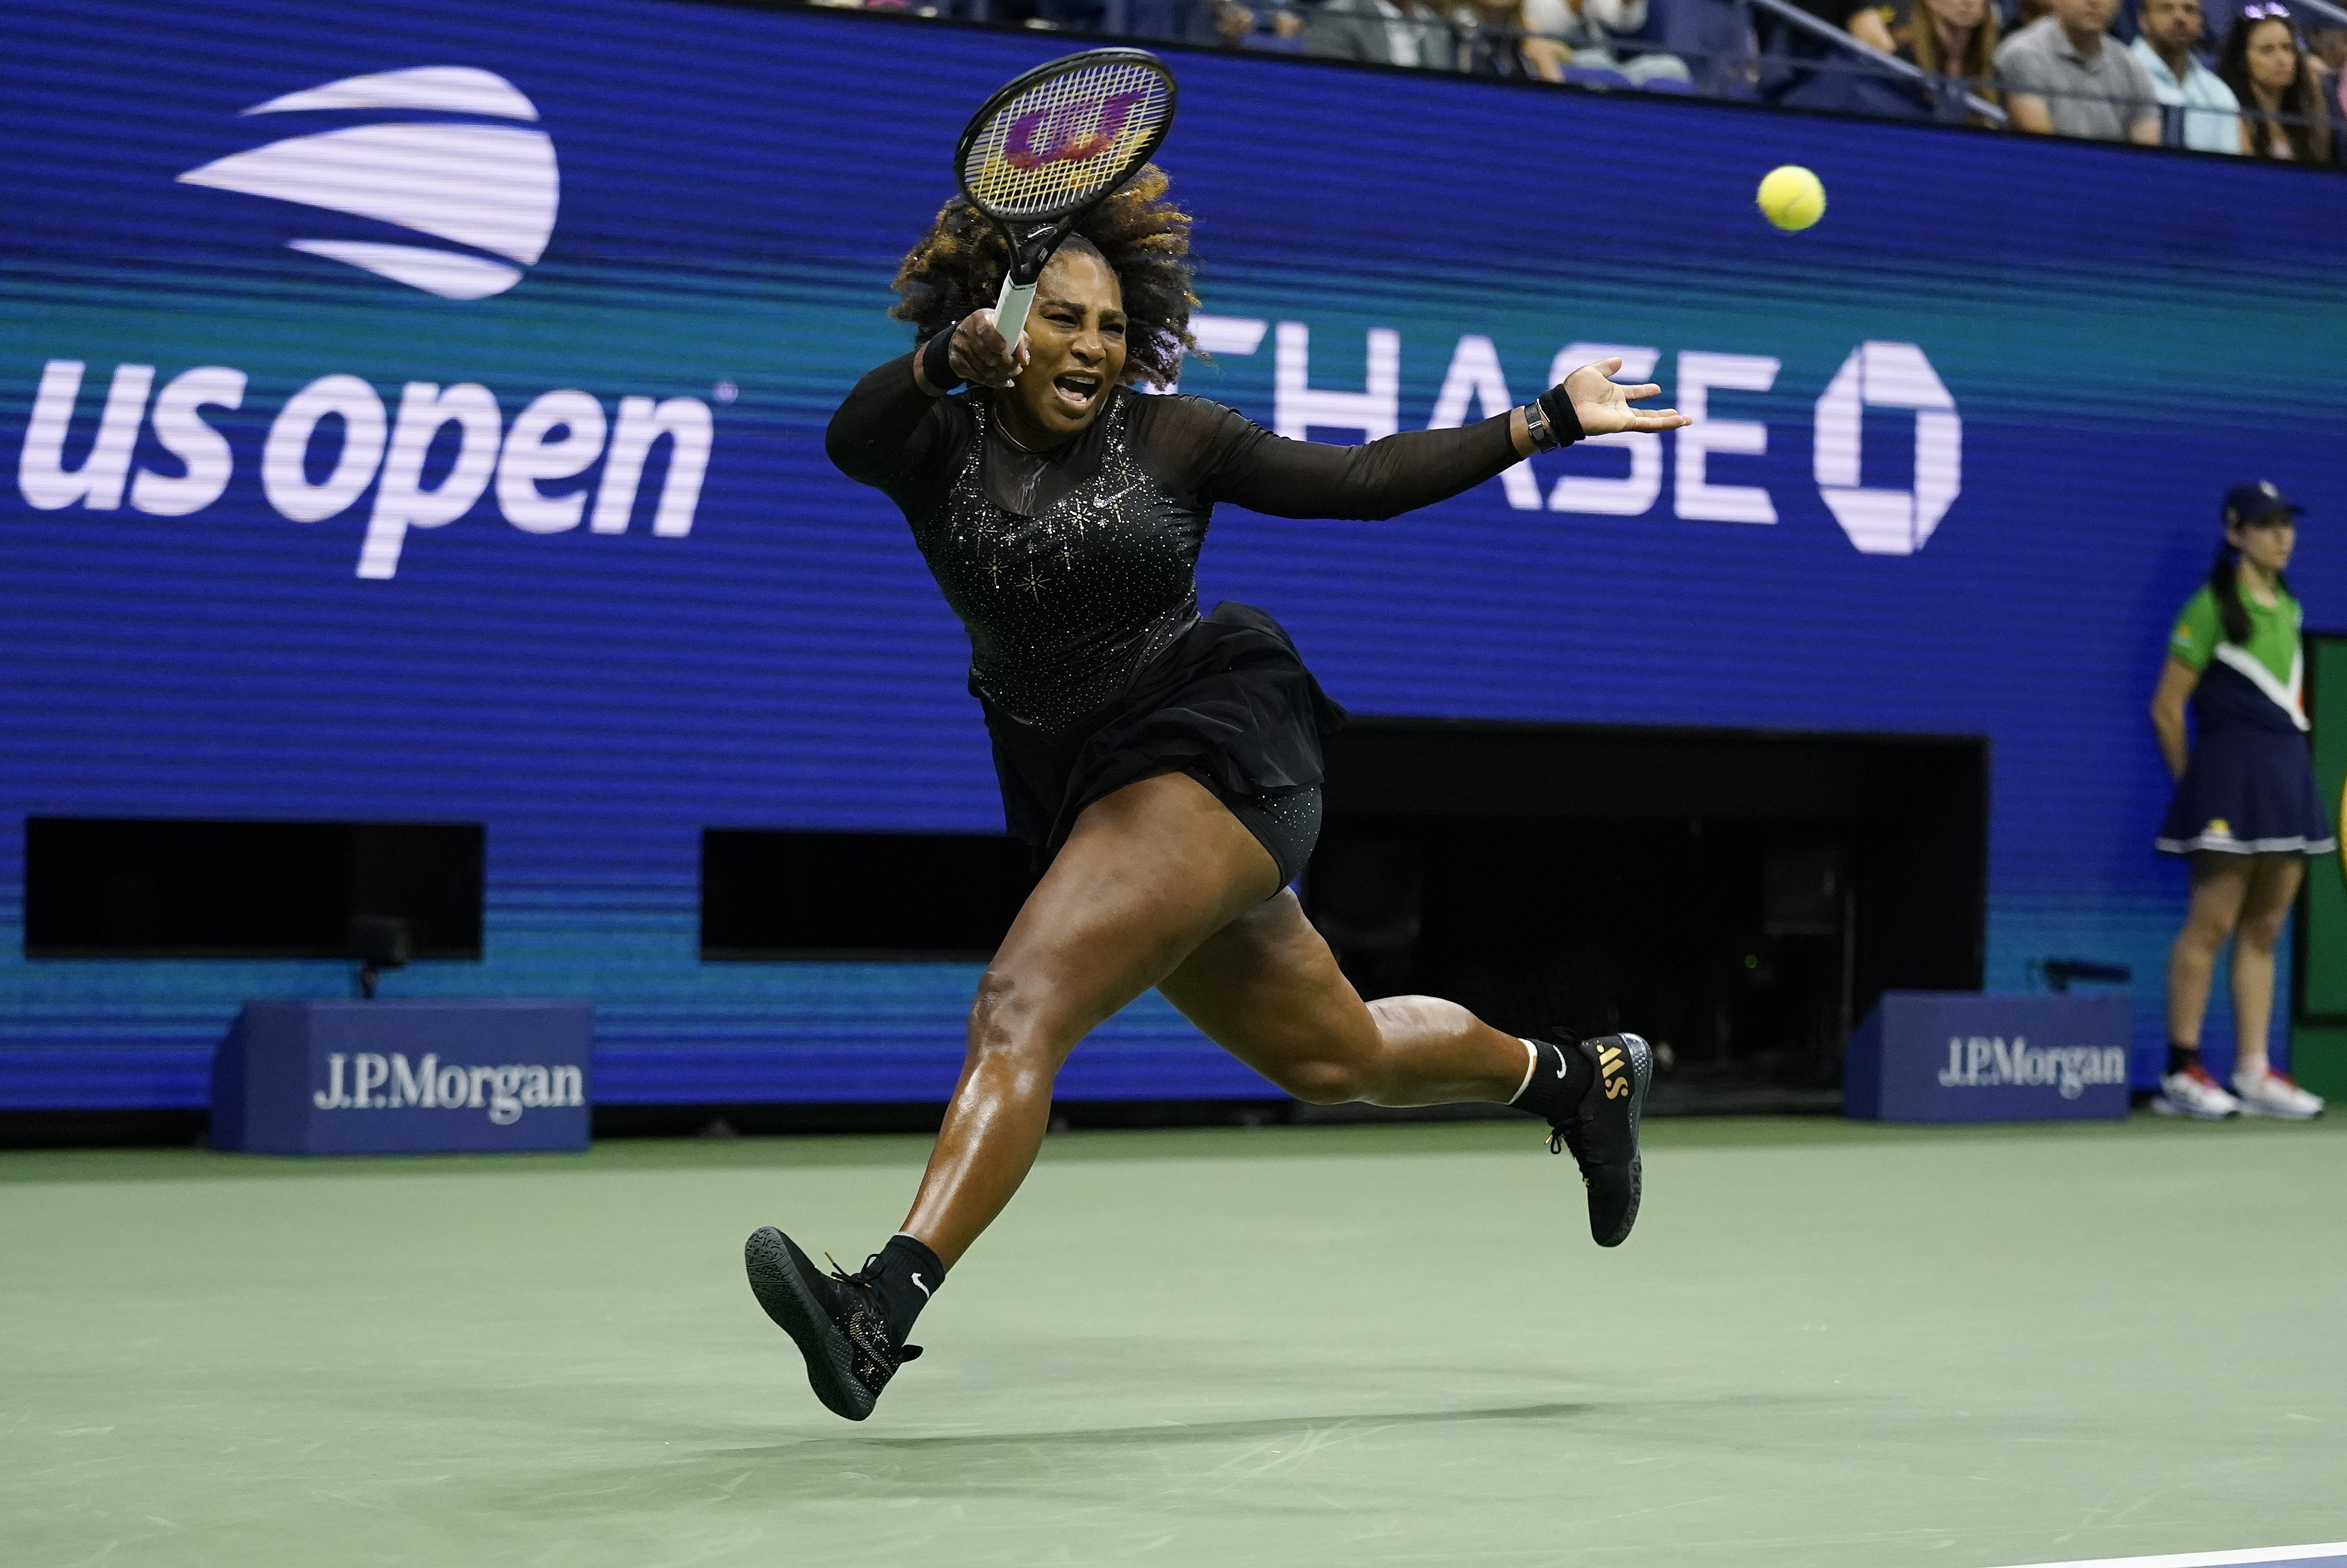 Serena Williams goodbye to U.S